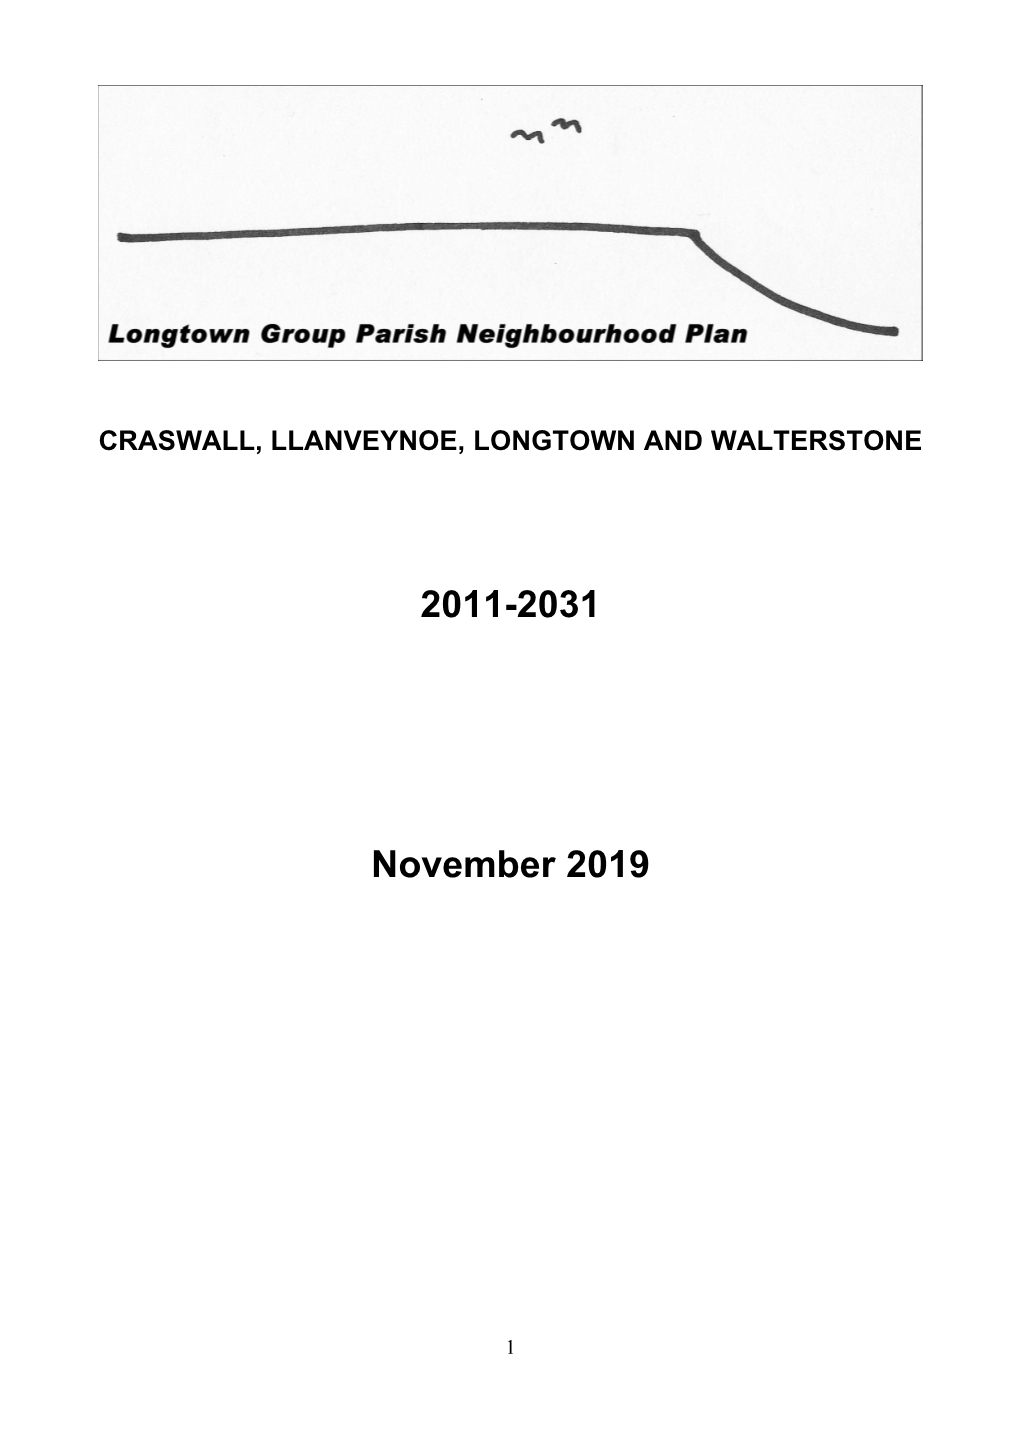 Craswall, Llanveynoe, Longtown and Walterstone